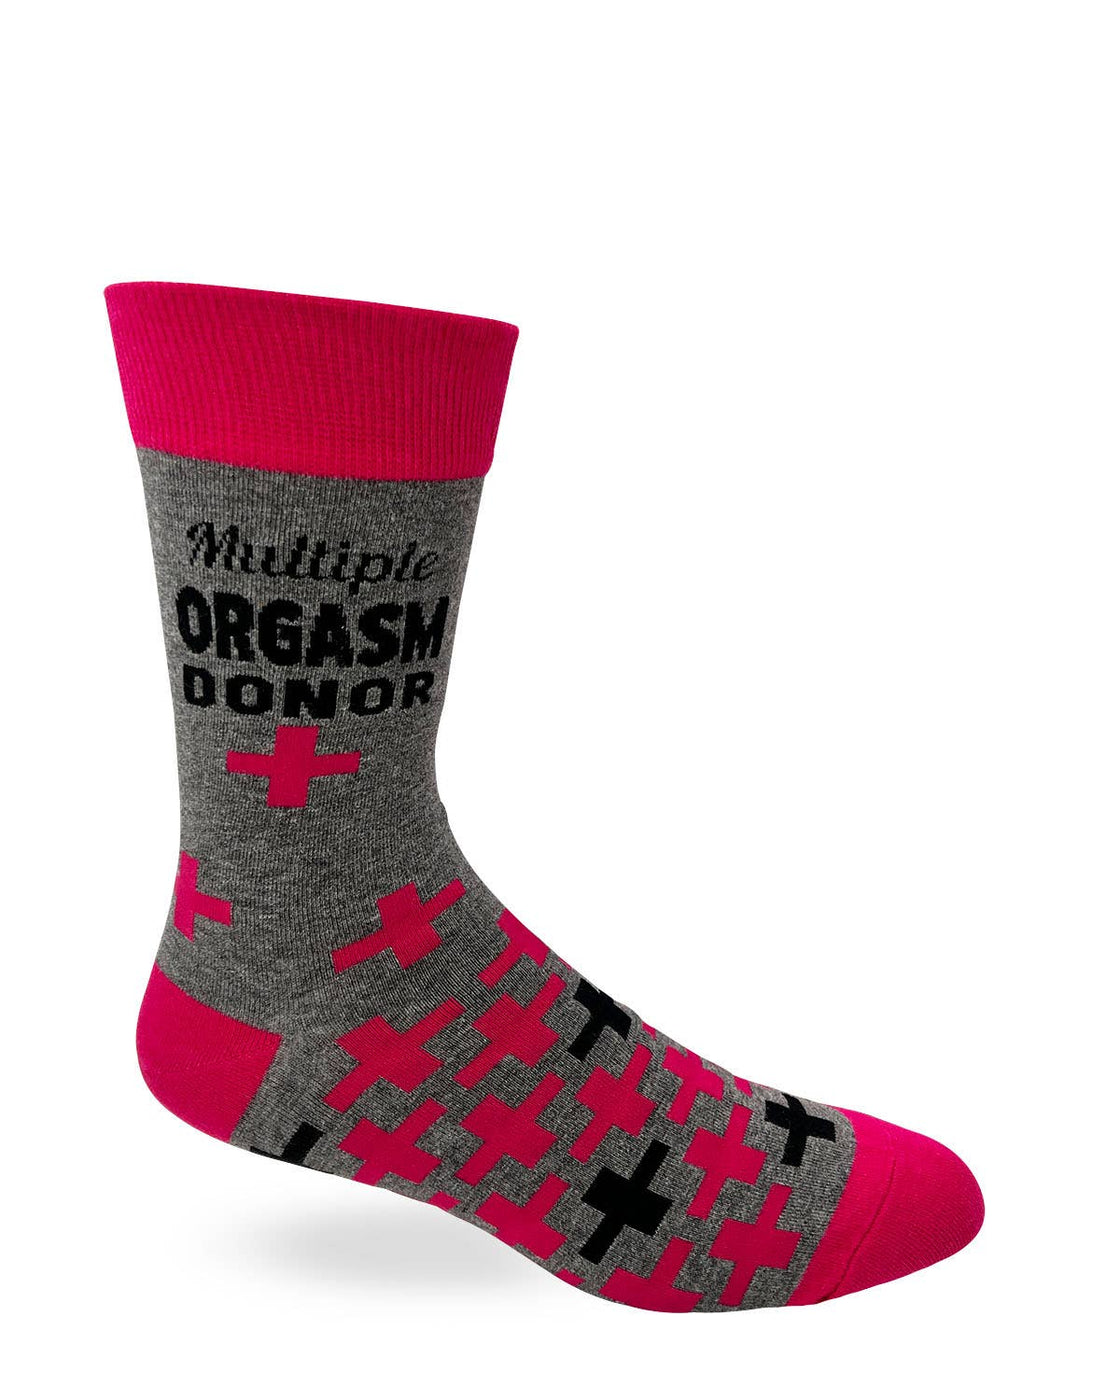 Multiple Orgasm Donor Men's Novelty Crew Socks